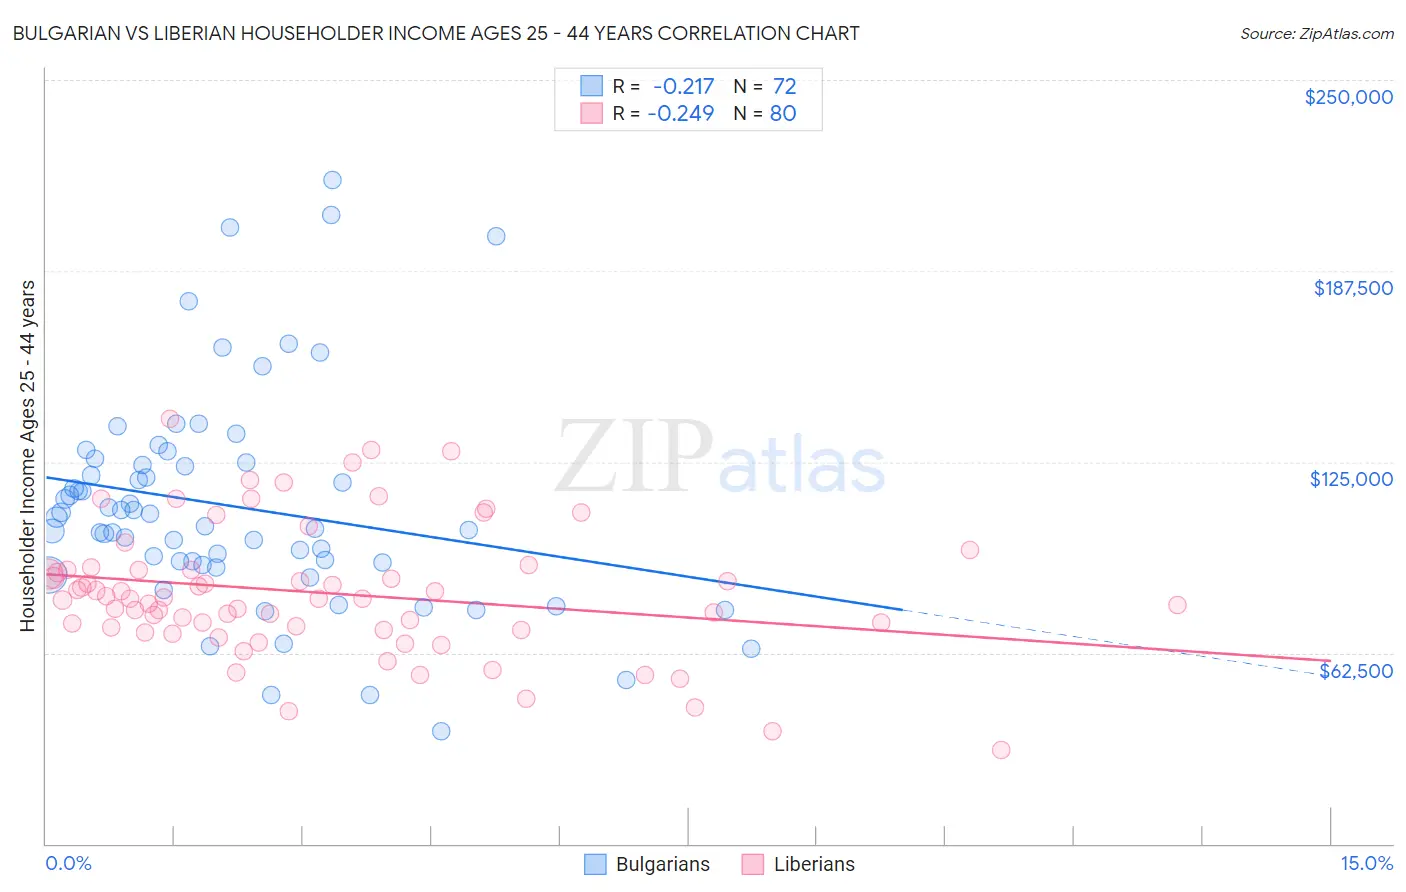 Bulgarian vs Liberian Householder Income Ages 25 - 44 years